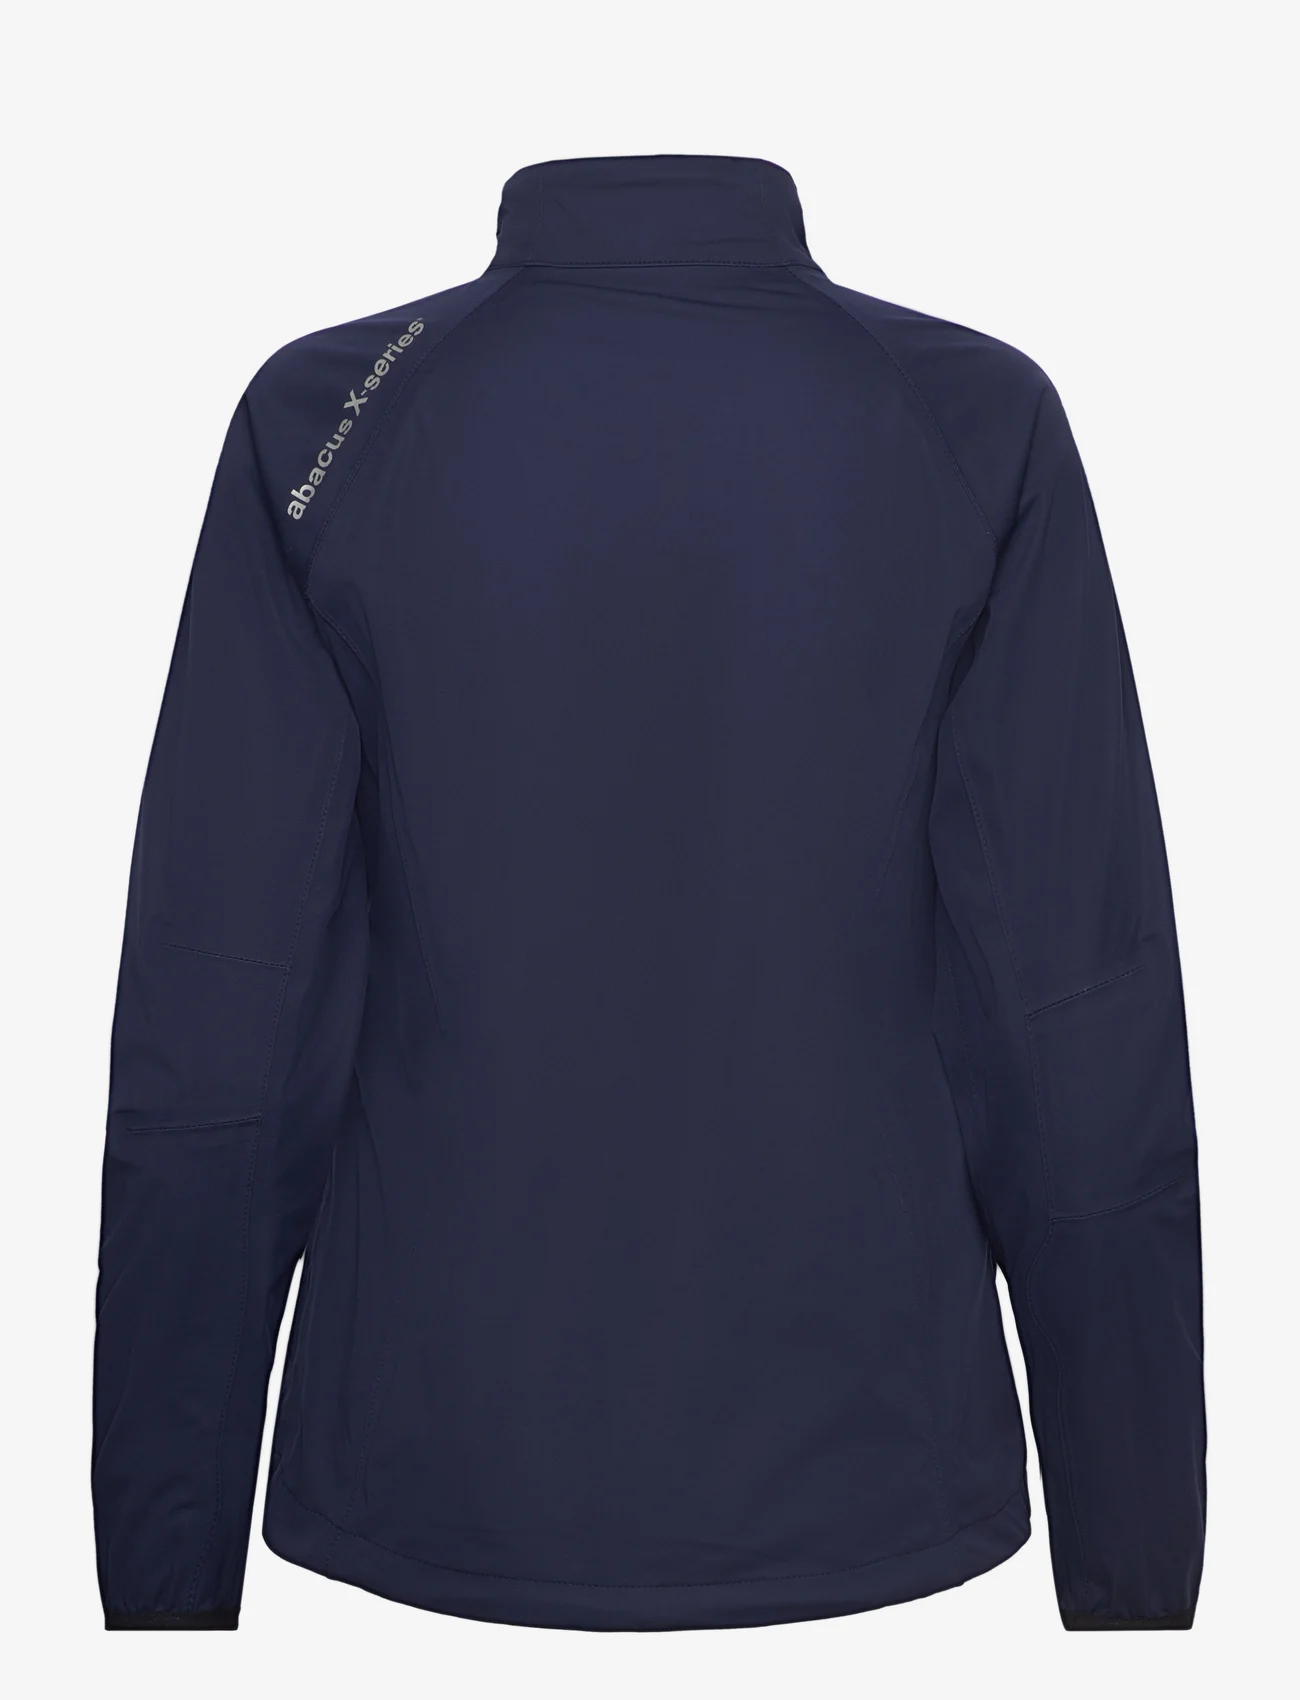 Abacus - Lds PDX waterproof jacket - golfa jakas - midnight navy - 1